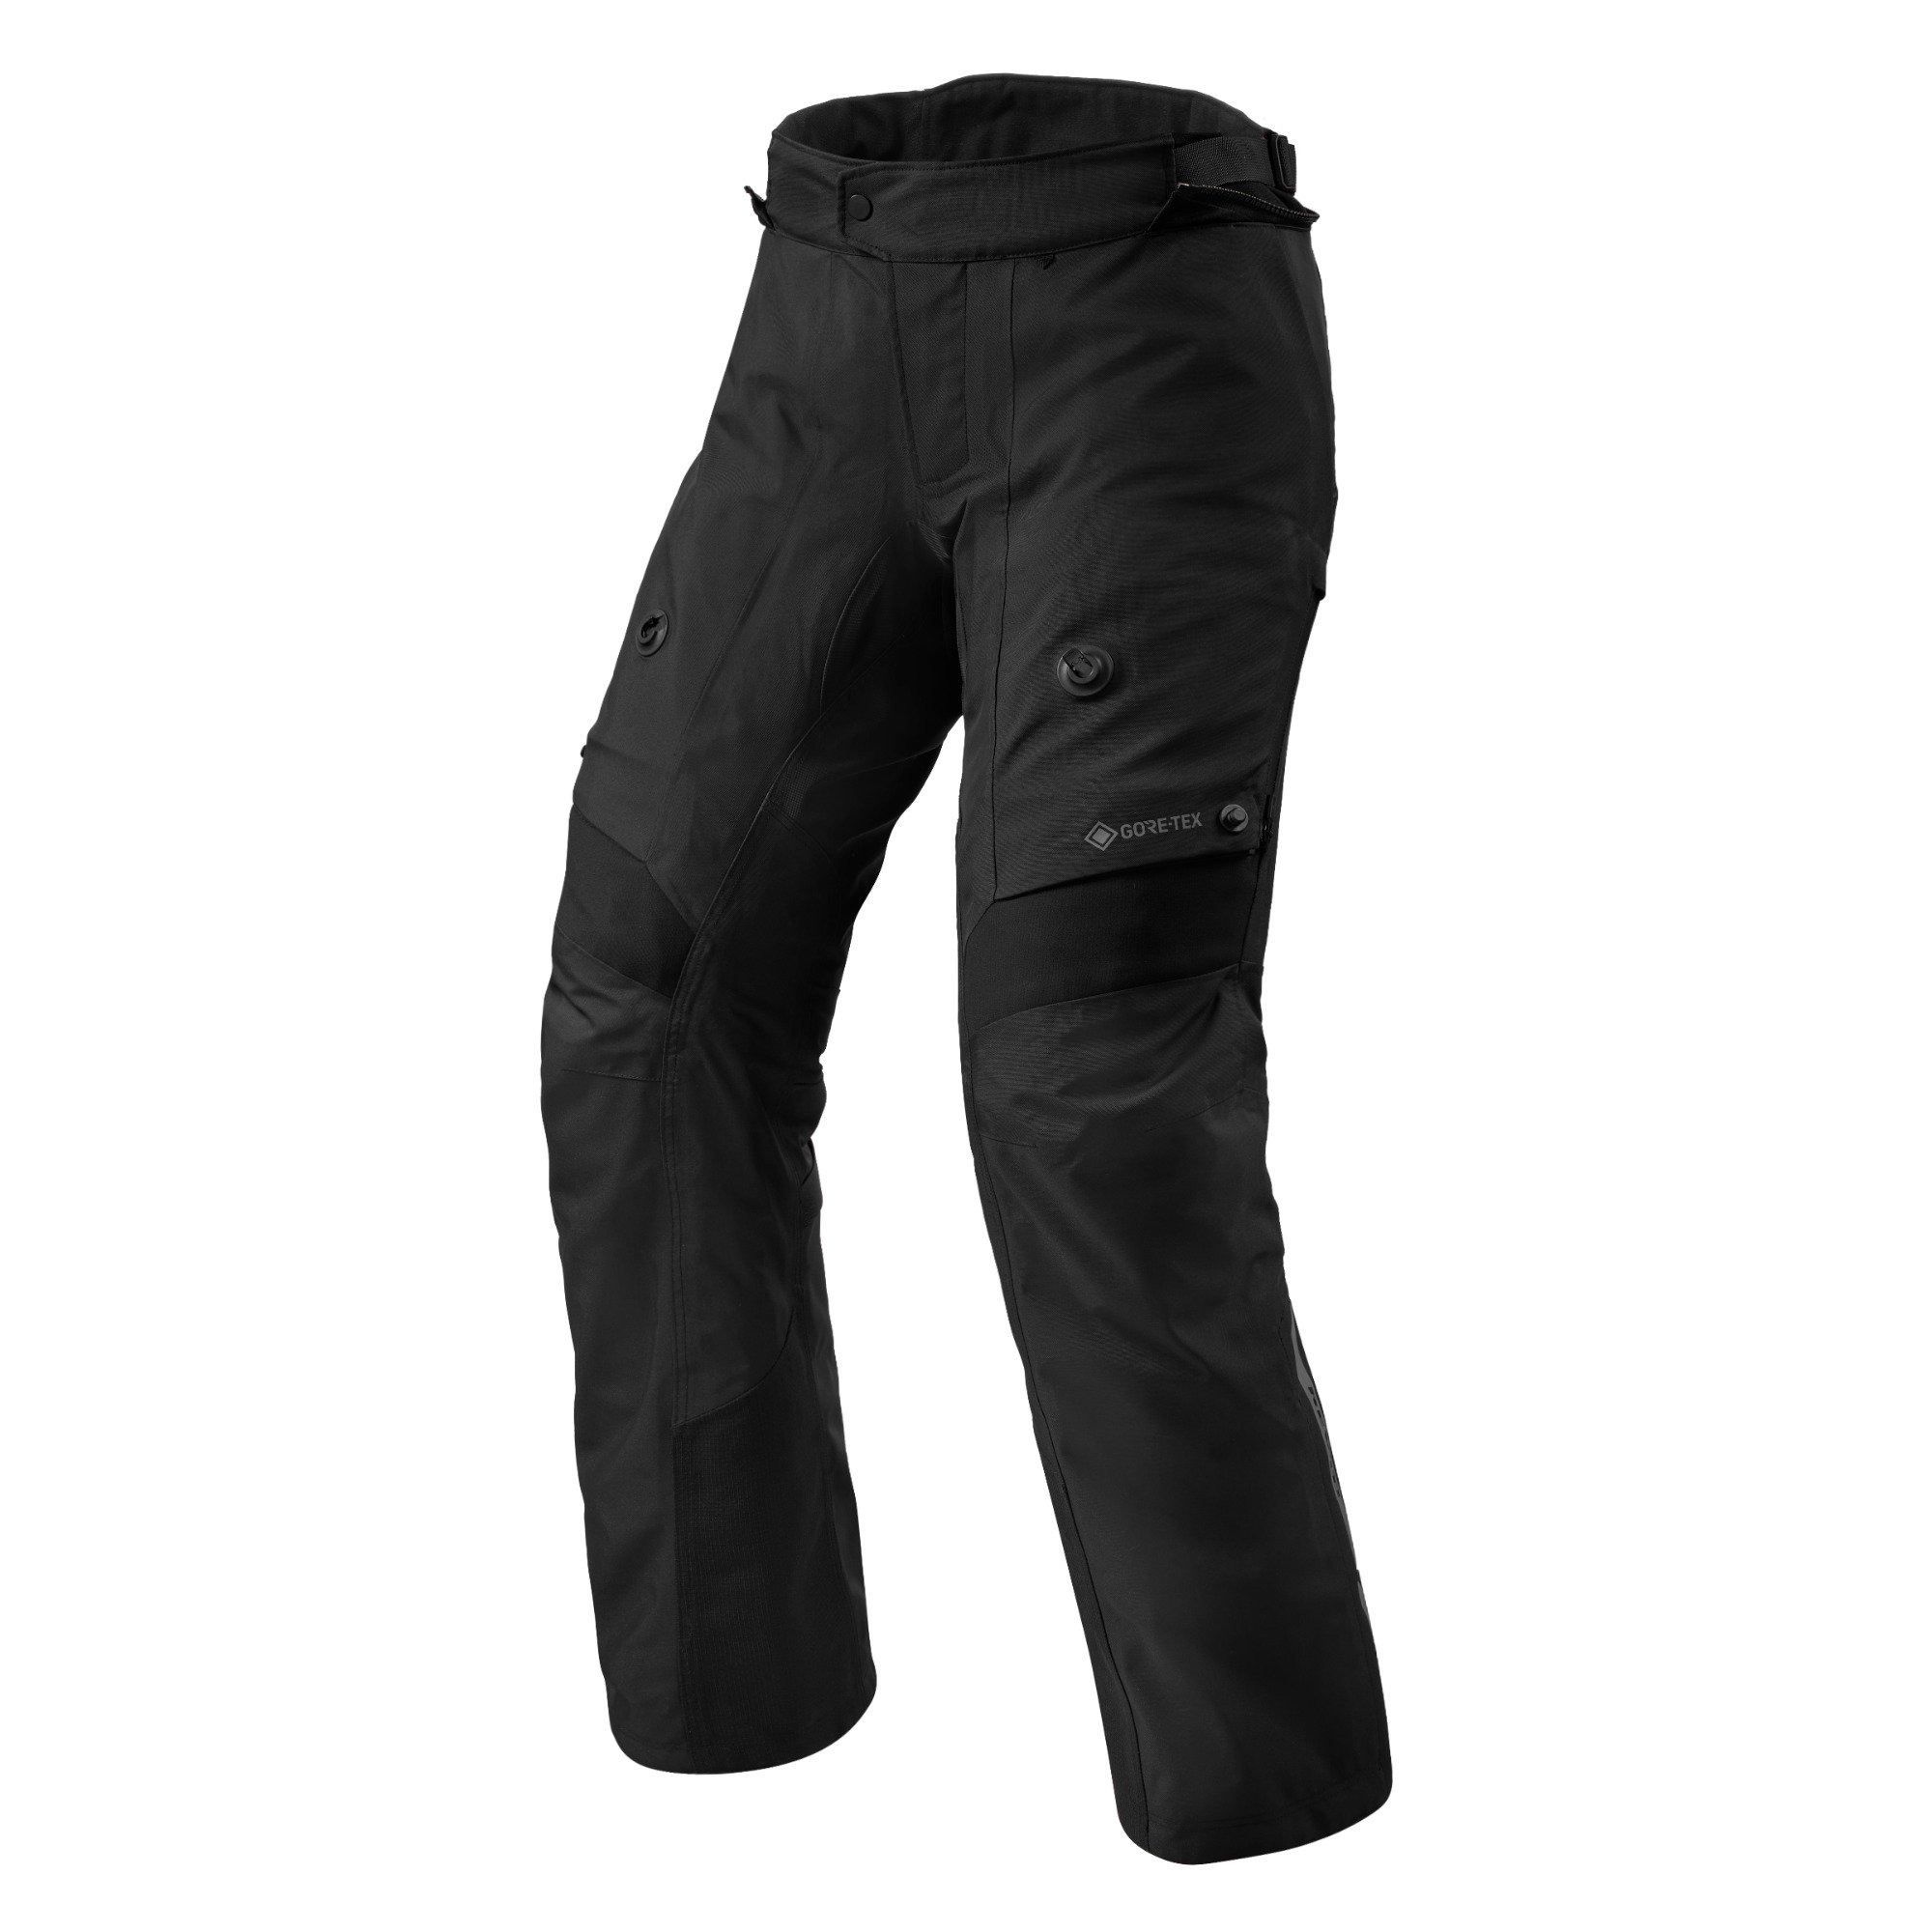 Image of REV'IT! Pants Poseidon 3 GTX Black Short Motorcycle Pants Talla XL